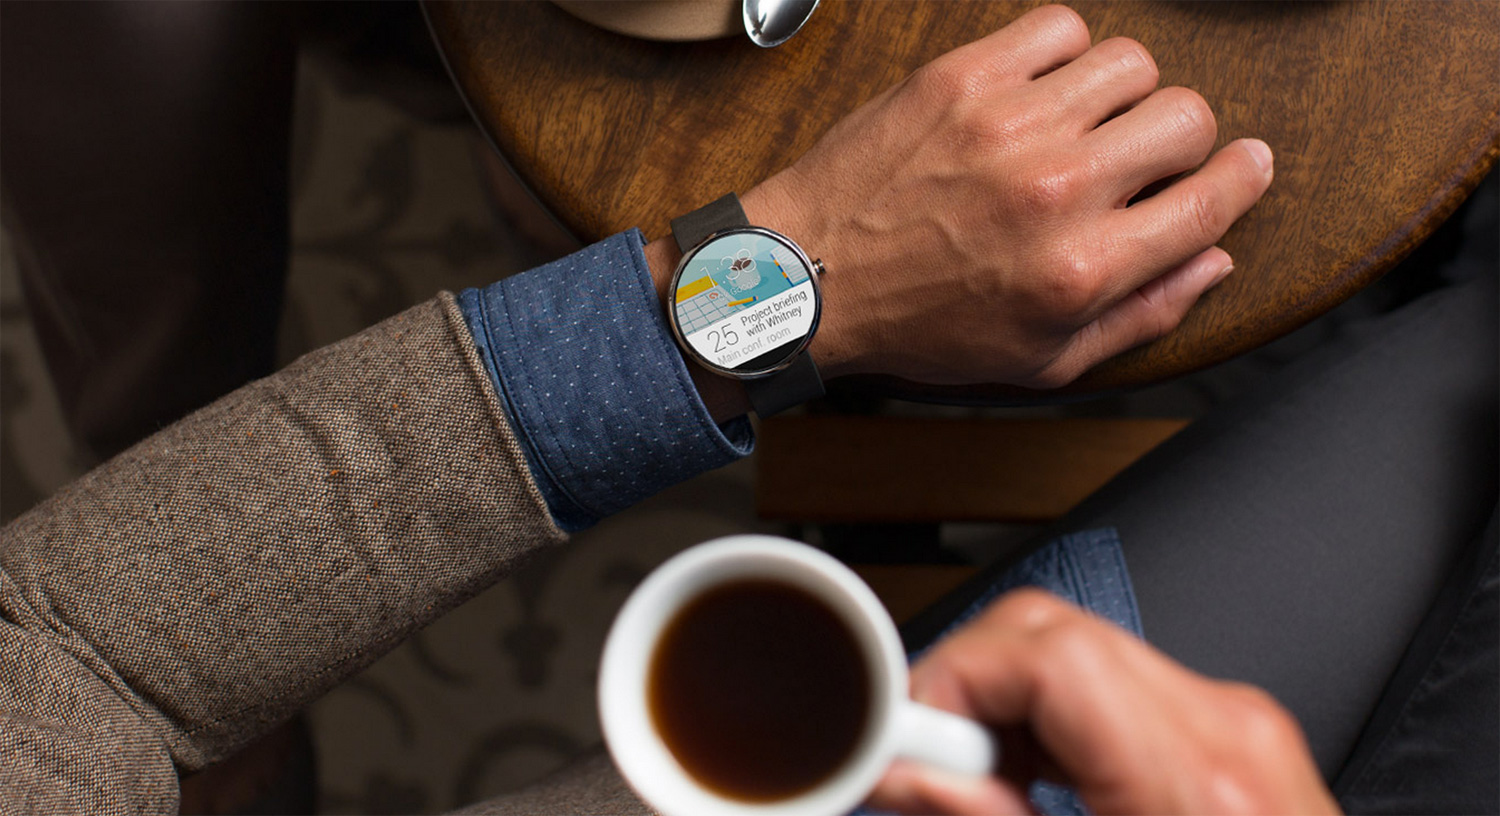 Motorola's Moto 360 smartwatch.